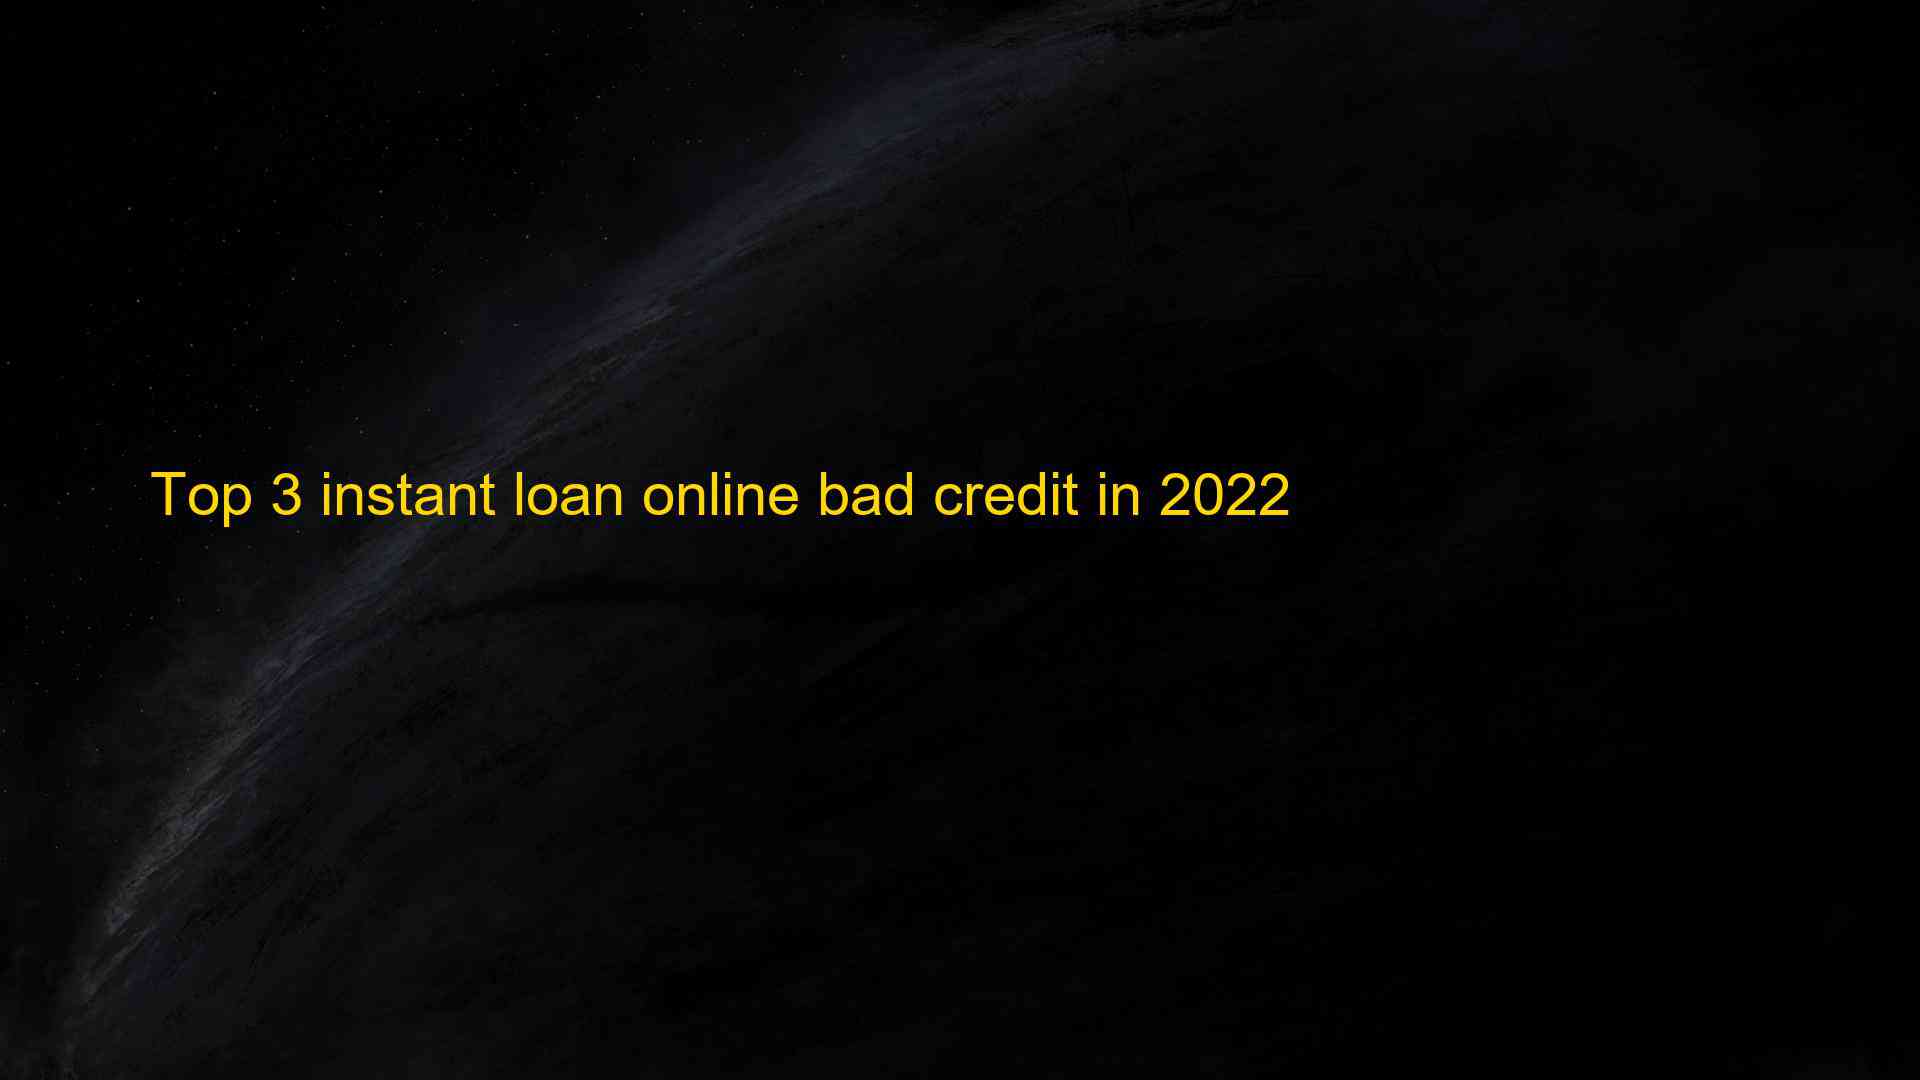 Top 3 instant loan online bad credit in 2022 1660193890